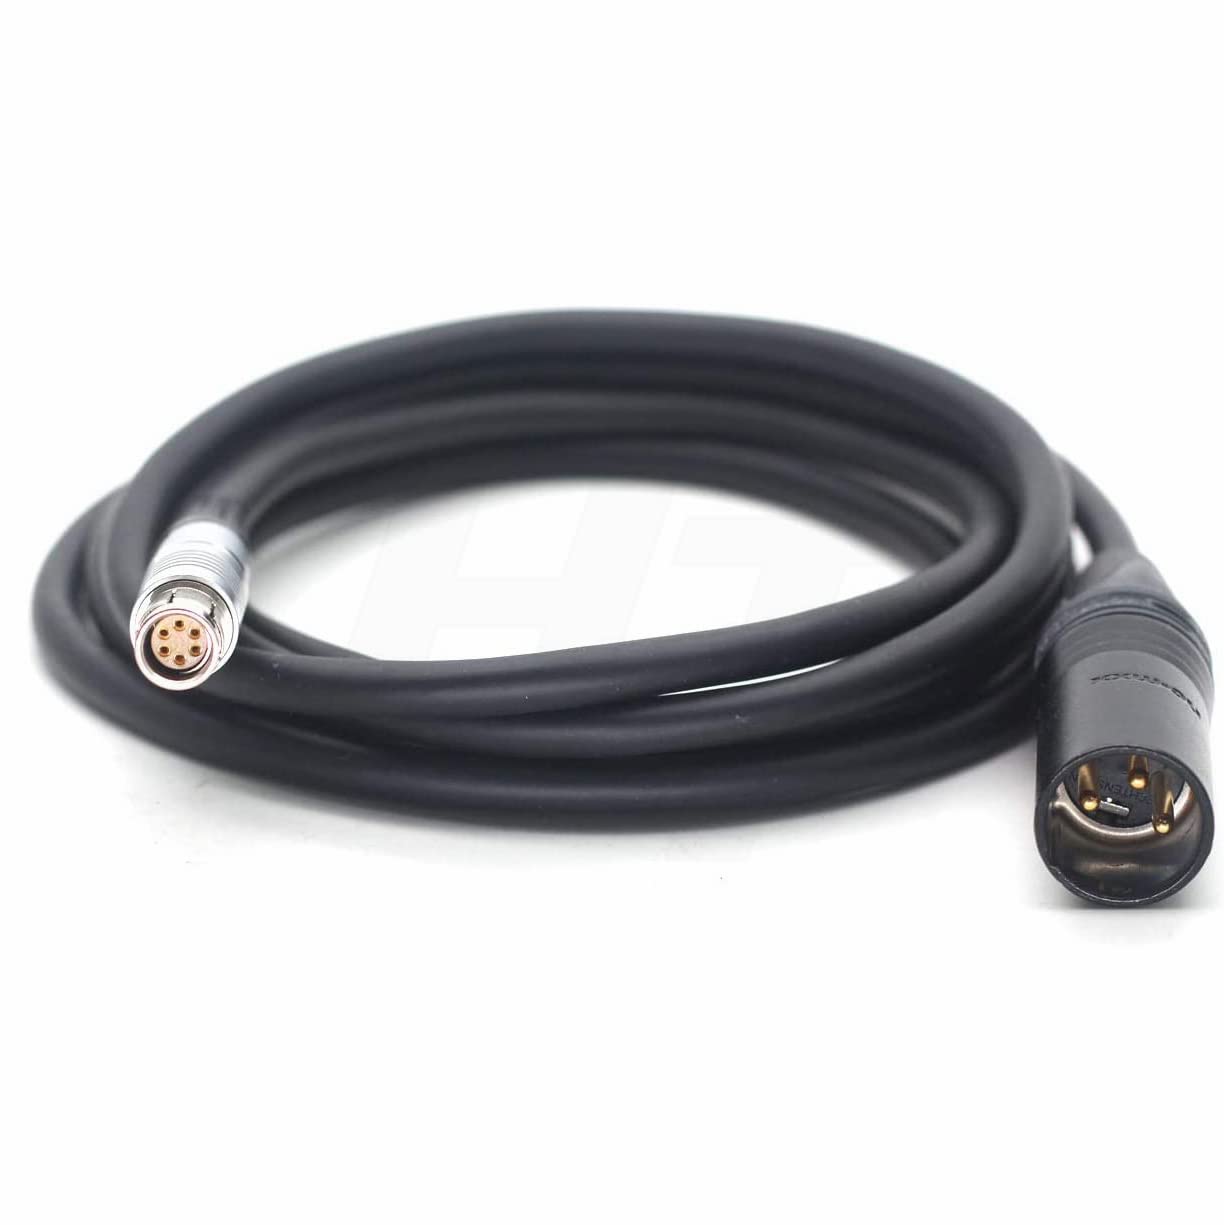 HangTon XLR 24V to Fischer 6-pin Power cable for Phantom High Speed VEO S L 1310 1010 710 640, Miro c210 camera 1M